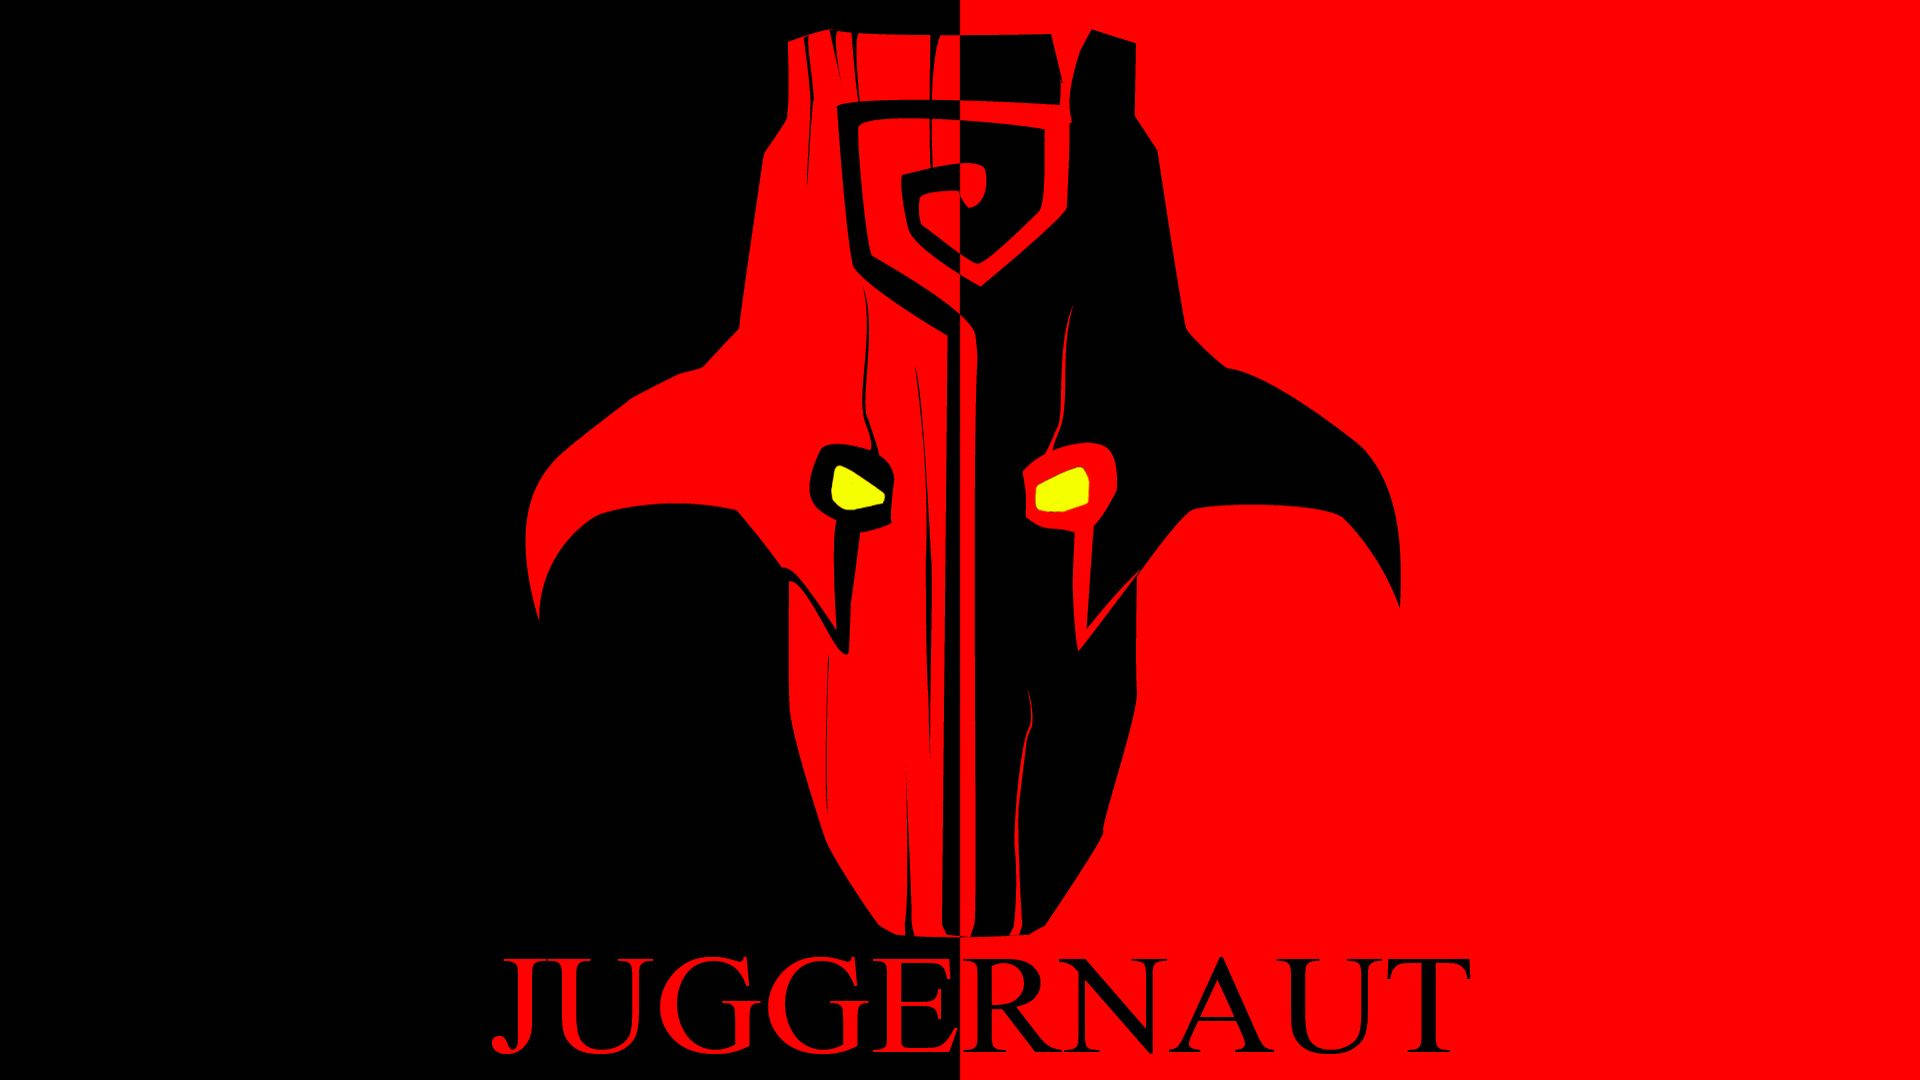 Juggernaut Dota Red Black Art Background